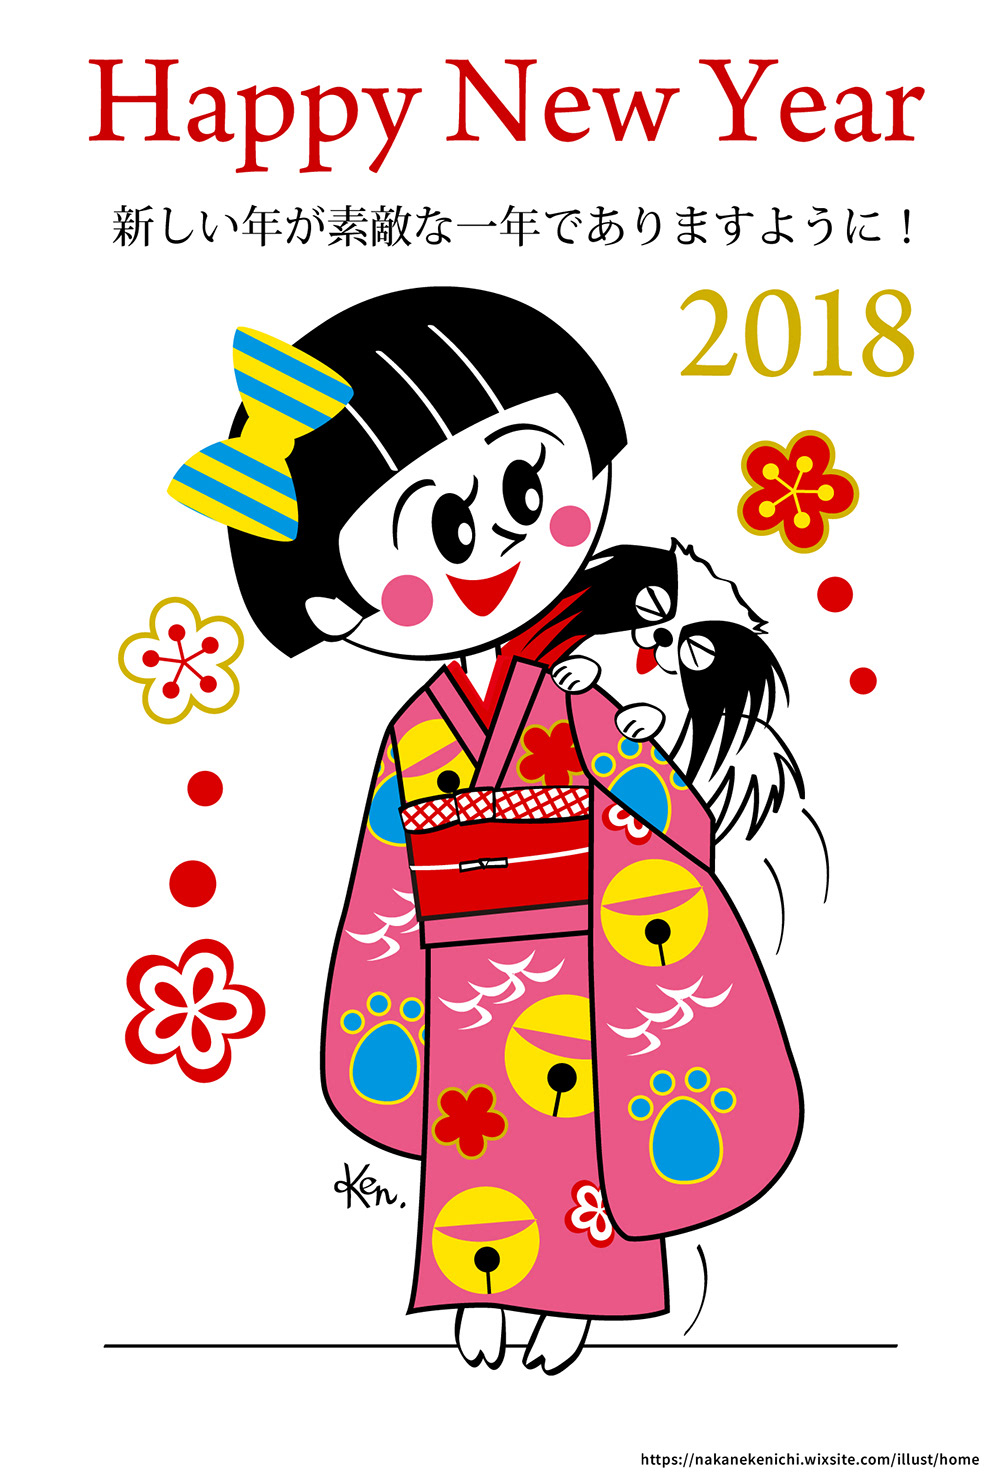 english conversation dog illustration bands Rock And Roll rock band kimono girl Kimonos Magazine Illustrations japanese tradition sumo